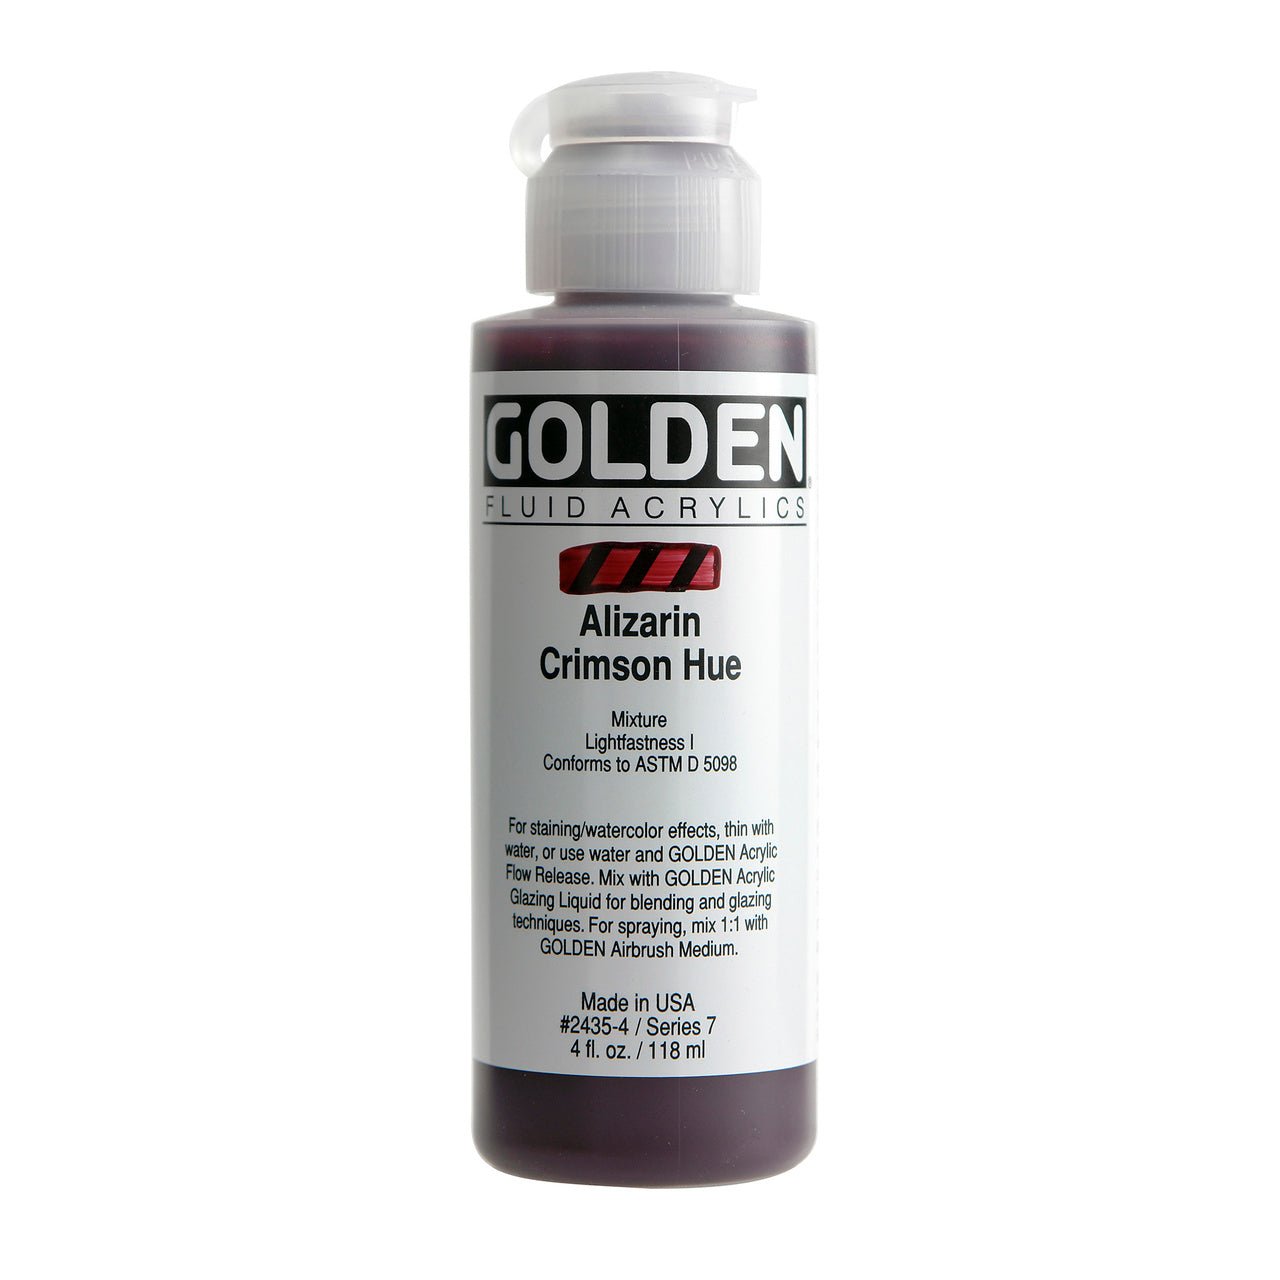 Golden Fluid Acrylic Alizarin Crimson Hue 4 oz - merriartist.com